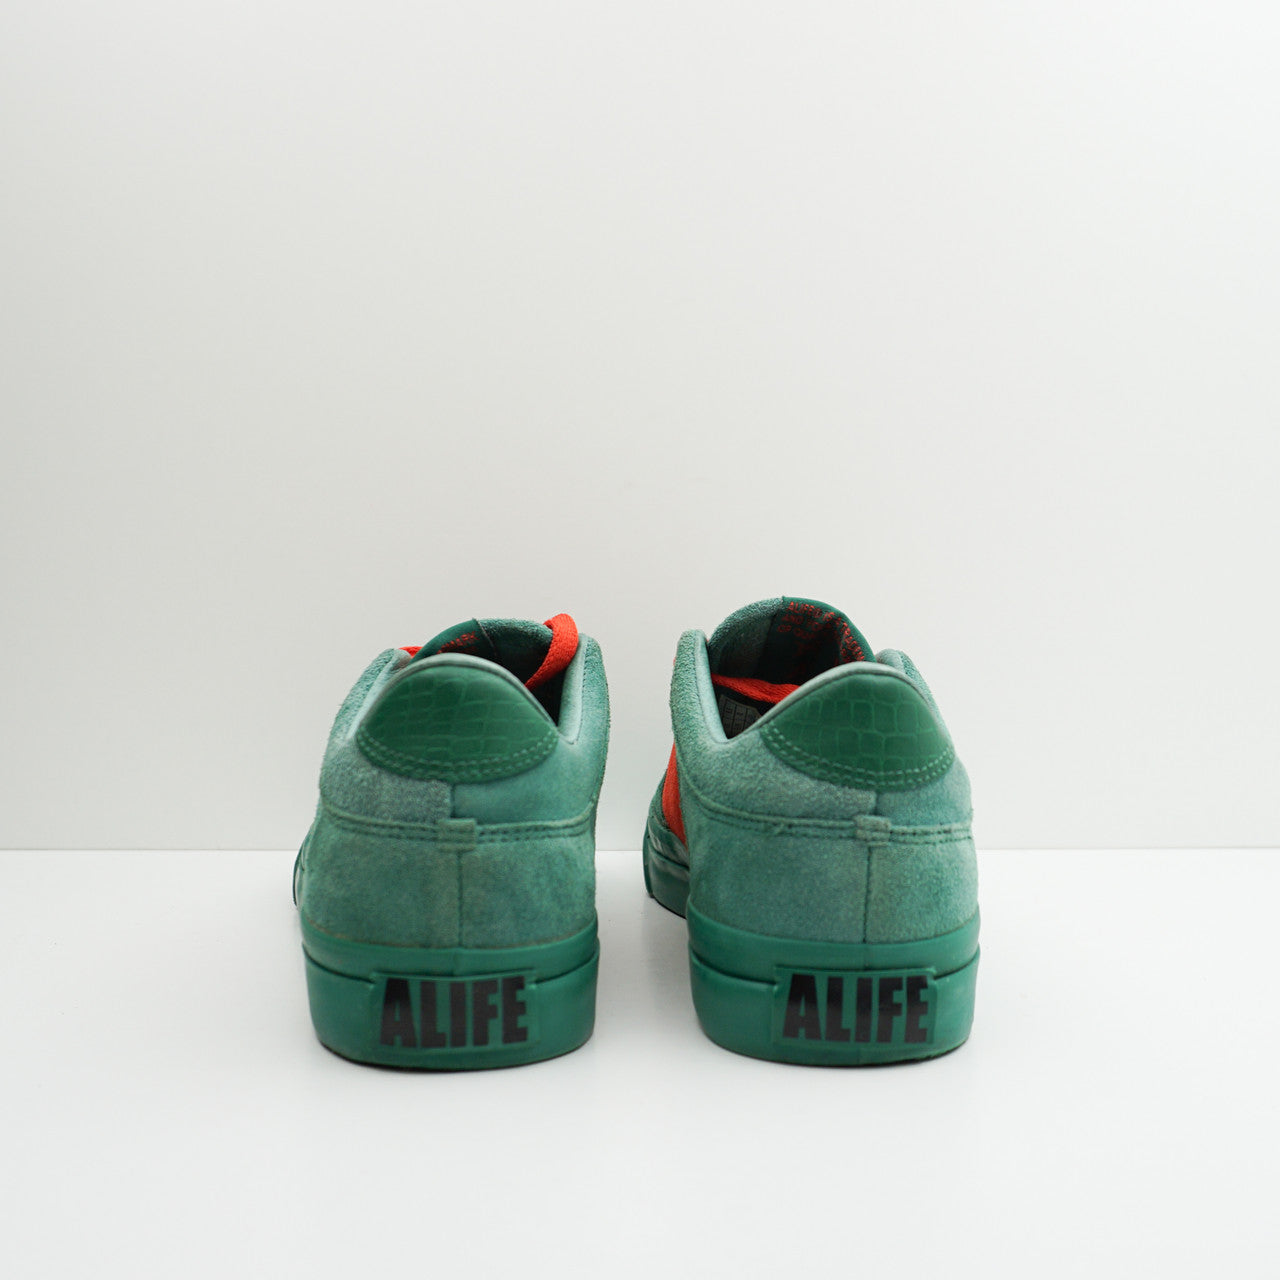 Alife Sneakers Green/Orange